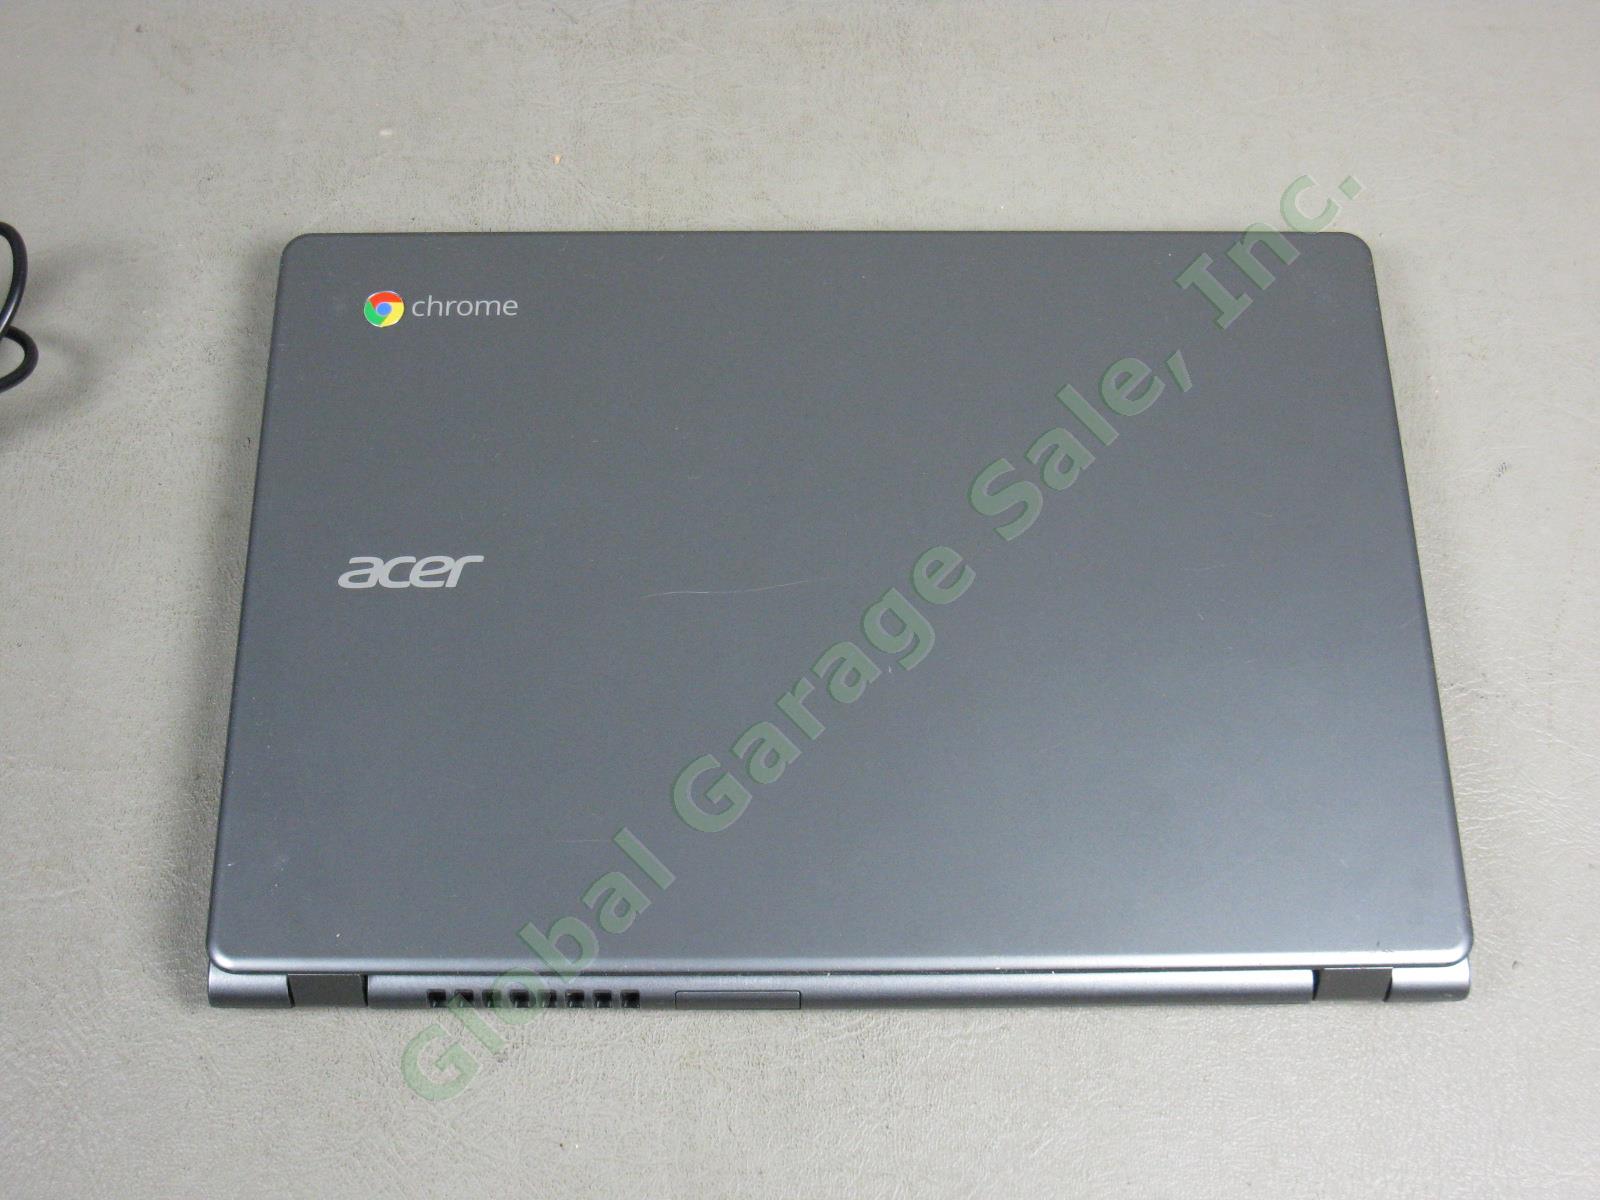 Acer Chromebook Netbook Laptop Computer C720-2844 11.6" 1.4GHz 4GB RAM 16GB SSD 2